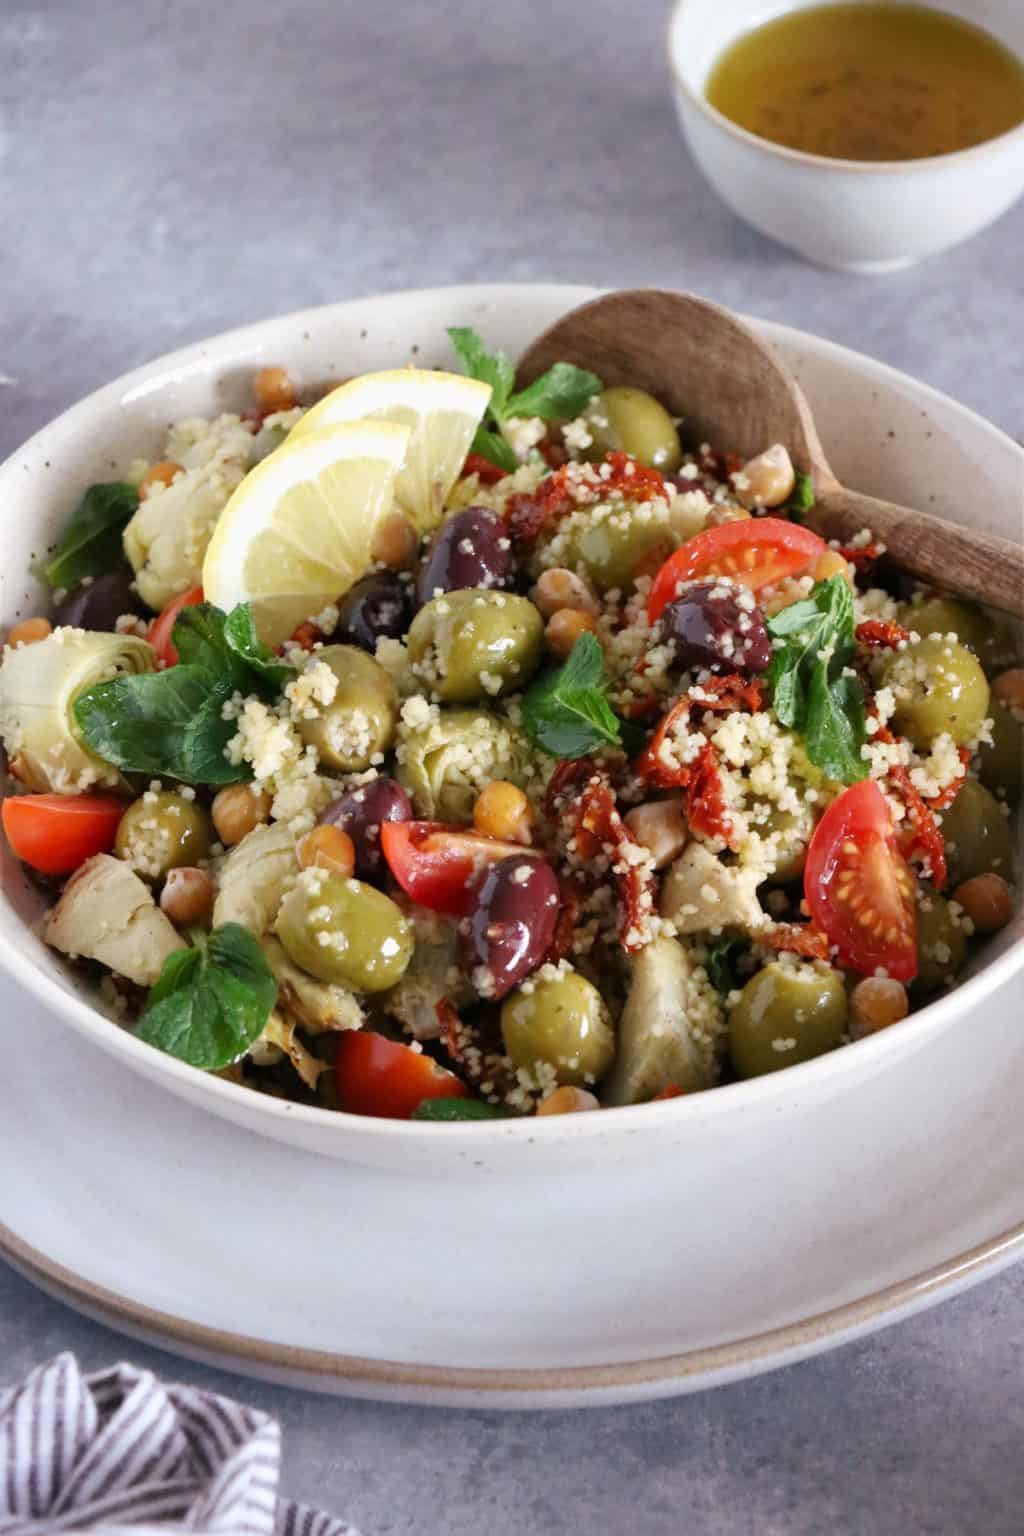 Mediterranean Chickpea Couscous Salad - Del's cooking twist